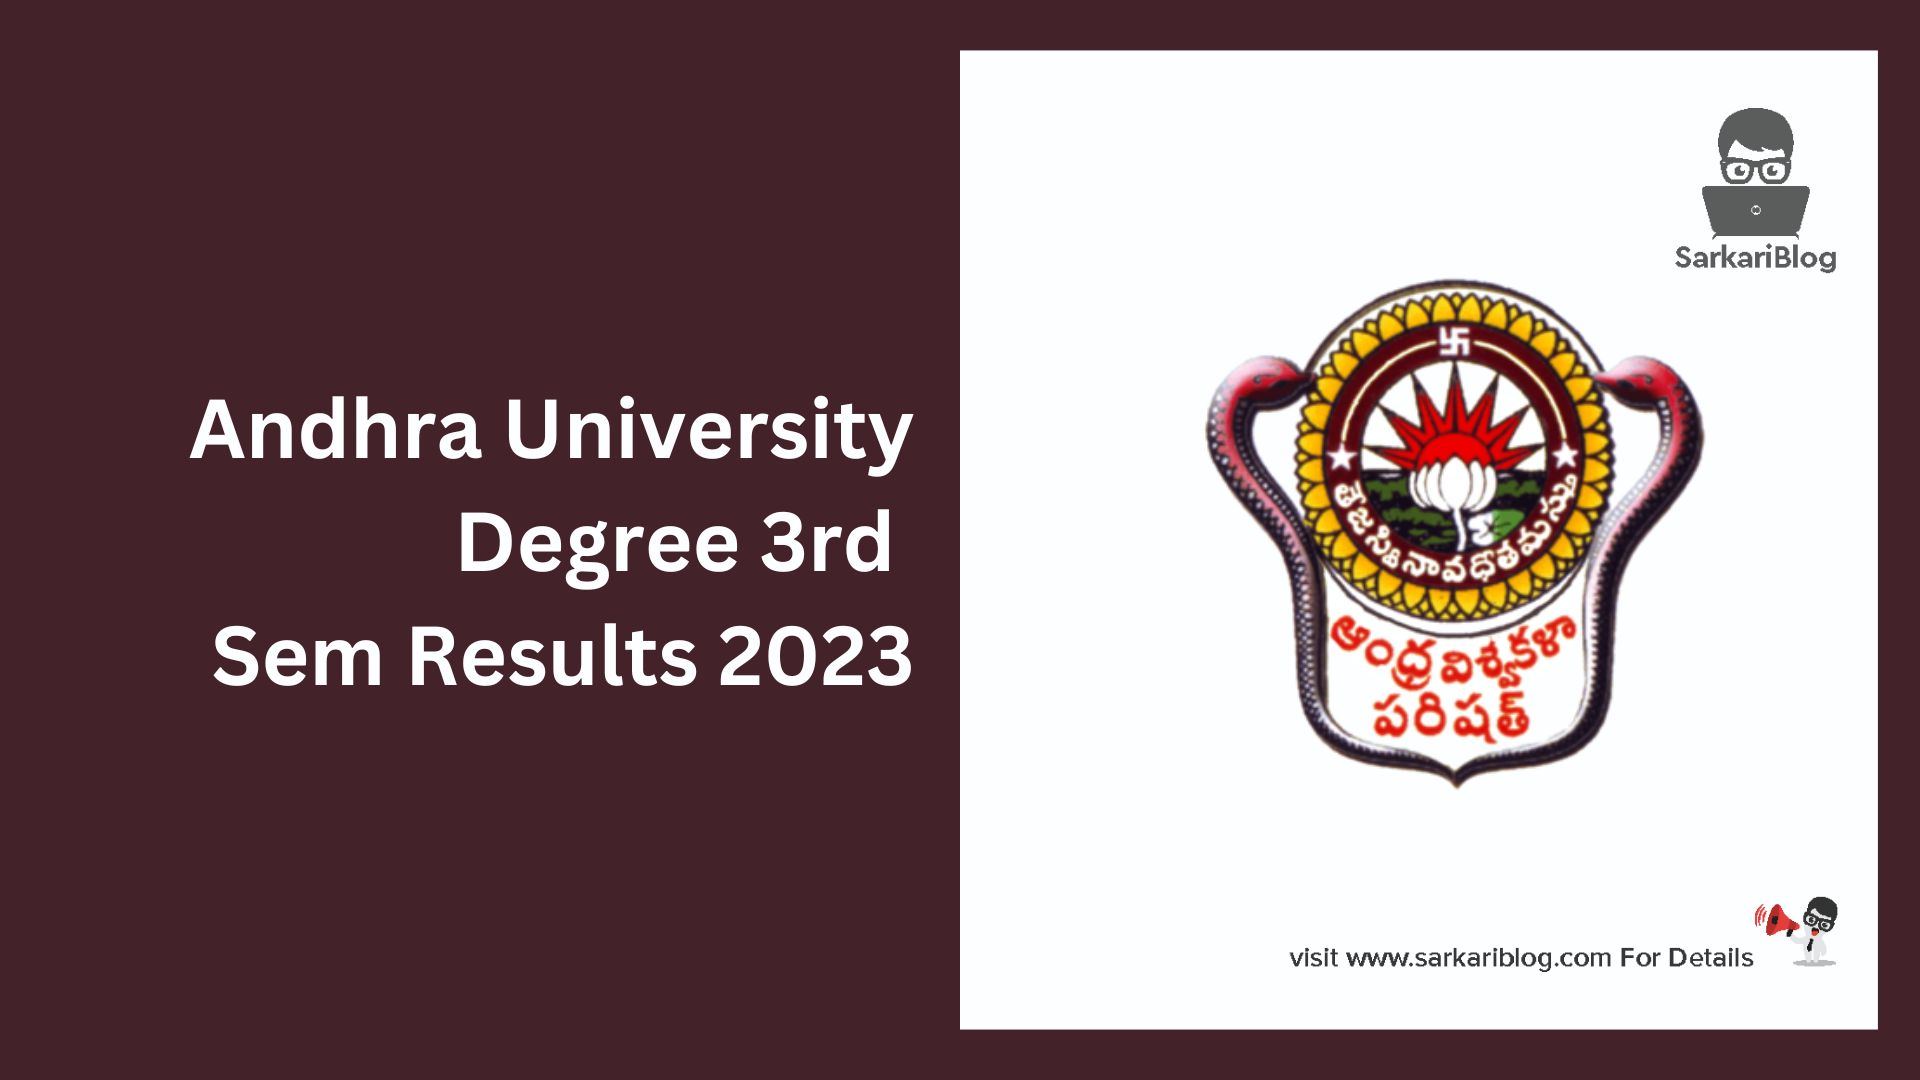 AU Degree 3rd Sem Results 2023